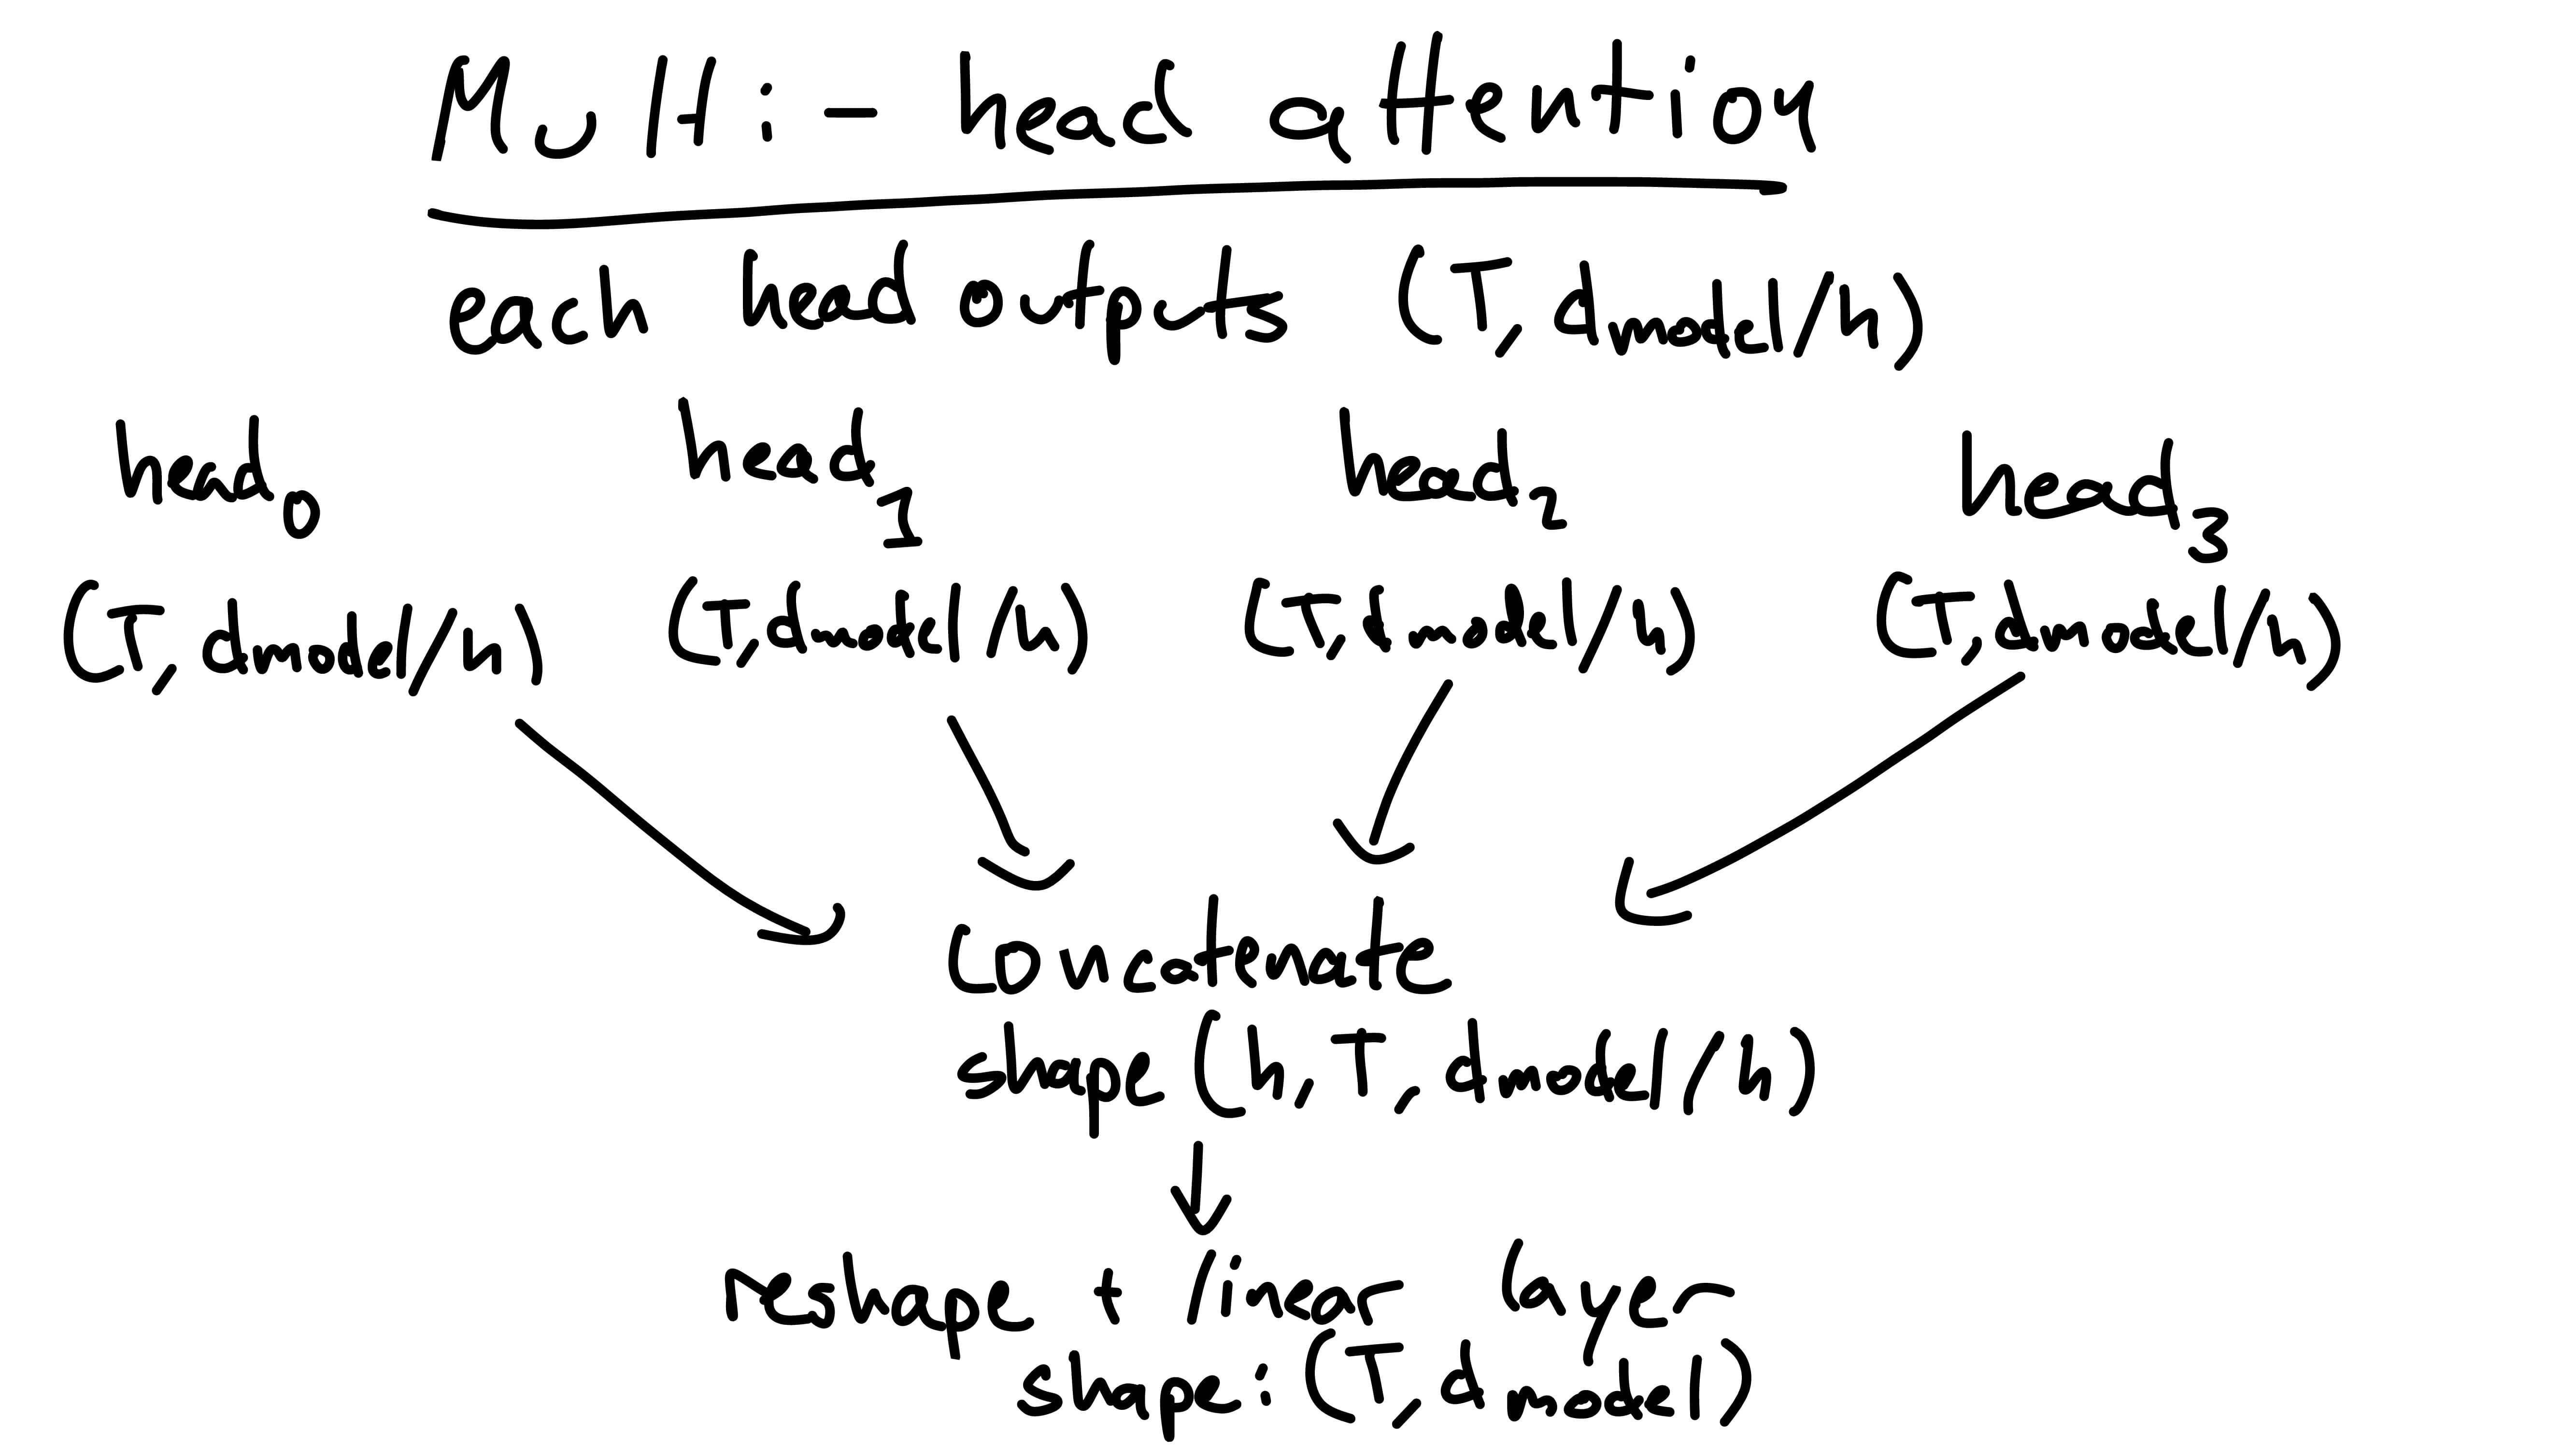 concatenate the head outputs